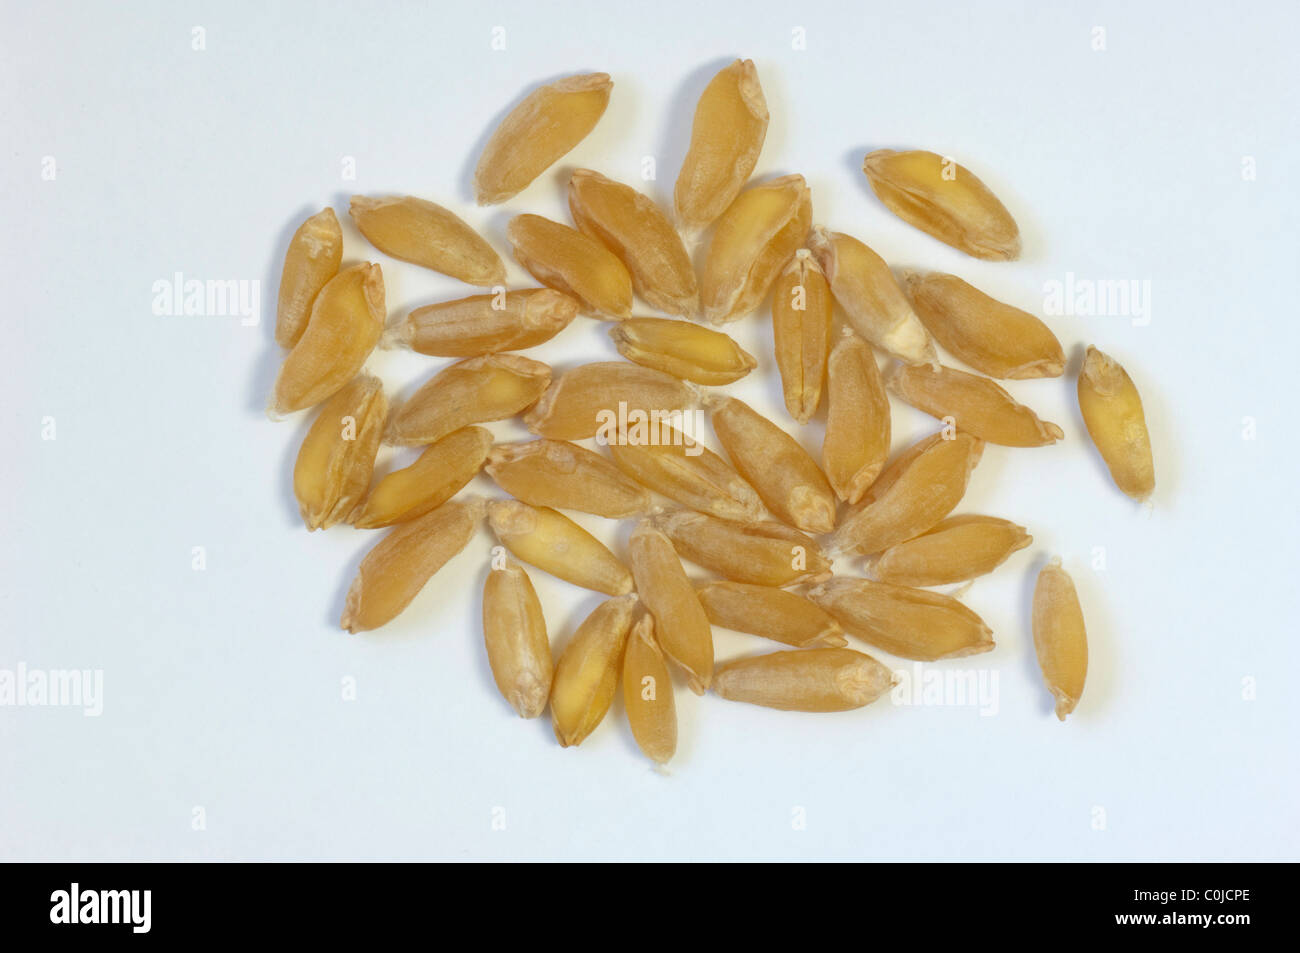 Durum Wheat, Macaroni Wheat (Triticum durum), seeds. Studio picture against a white background. Stock Photo